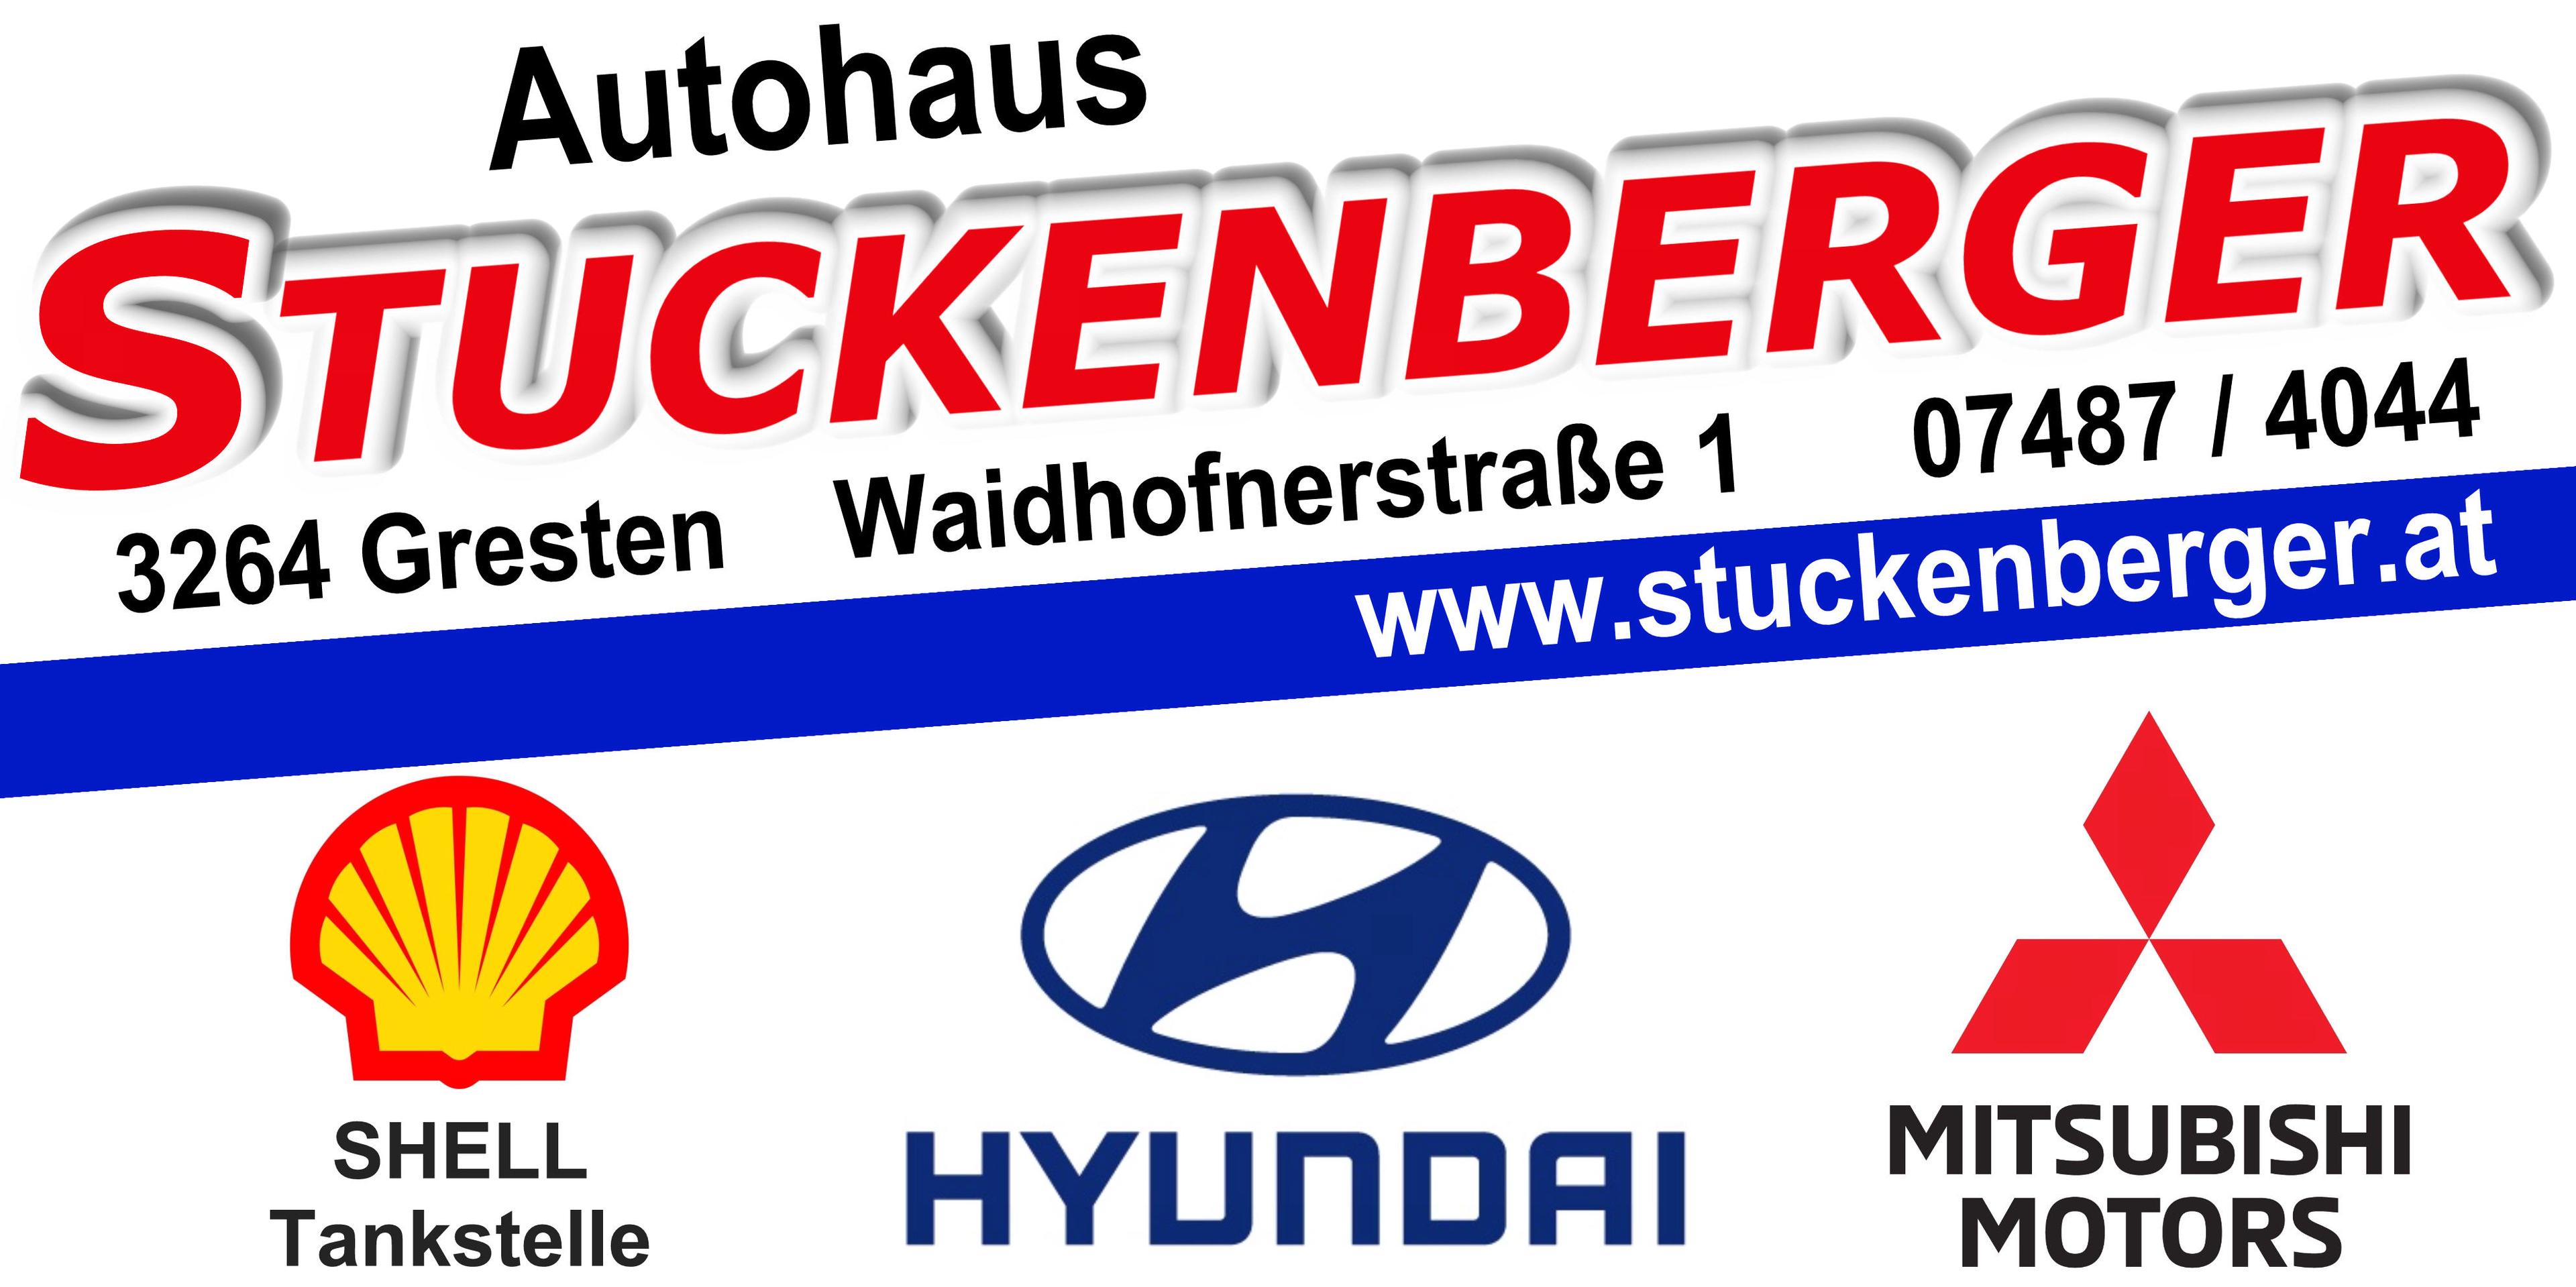 Stuckenberger Ges.m.b.H. | Hyundai